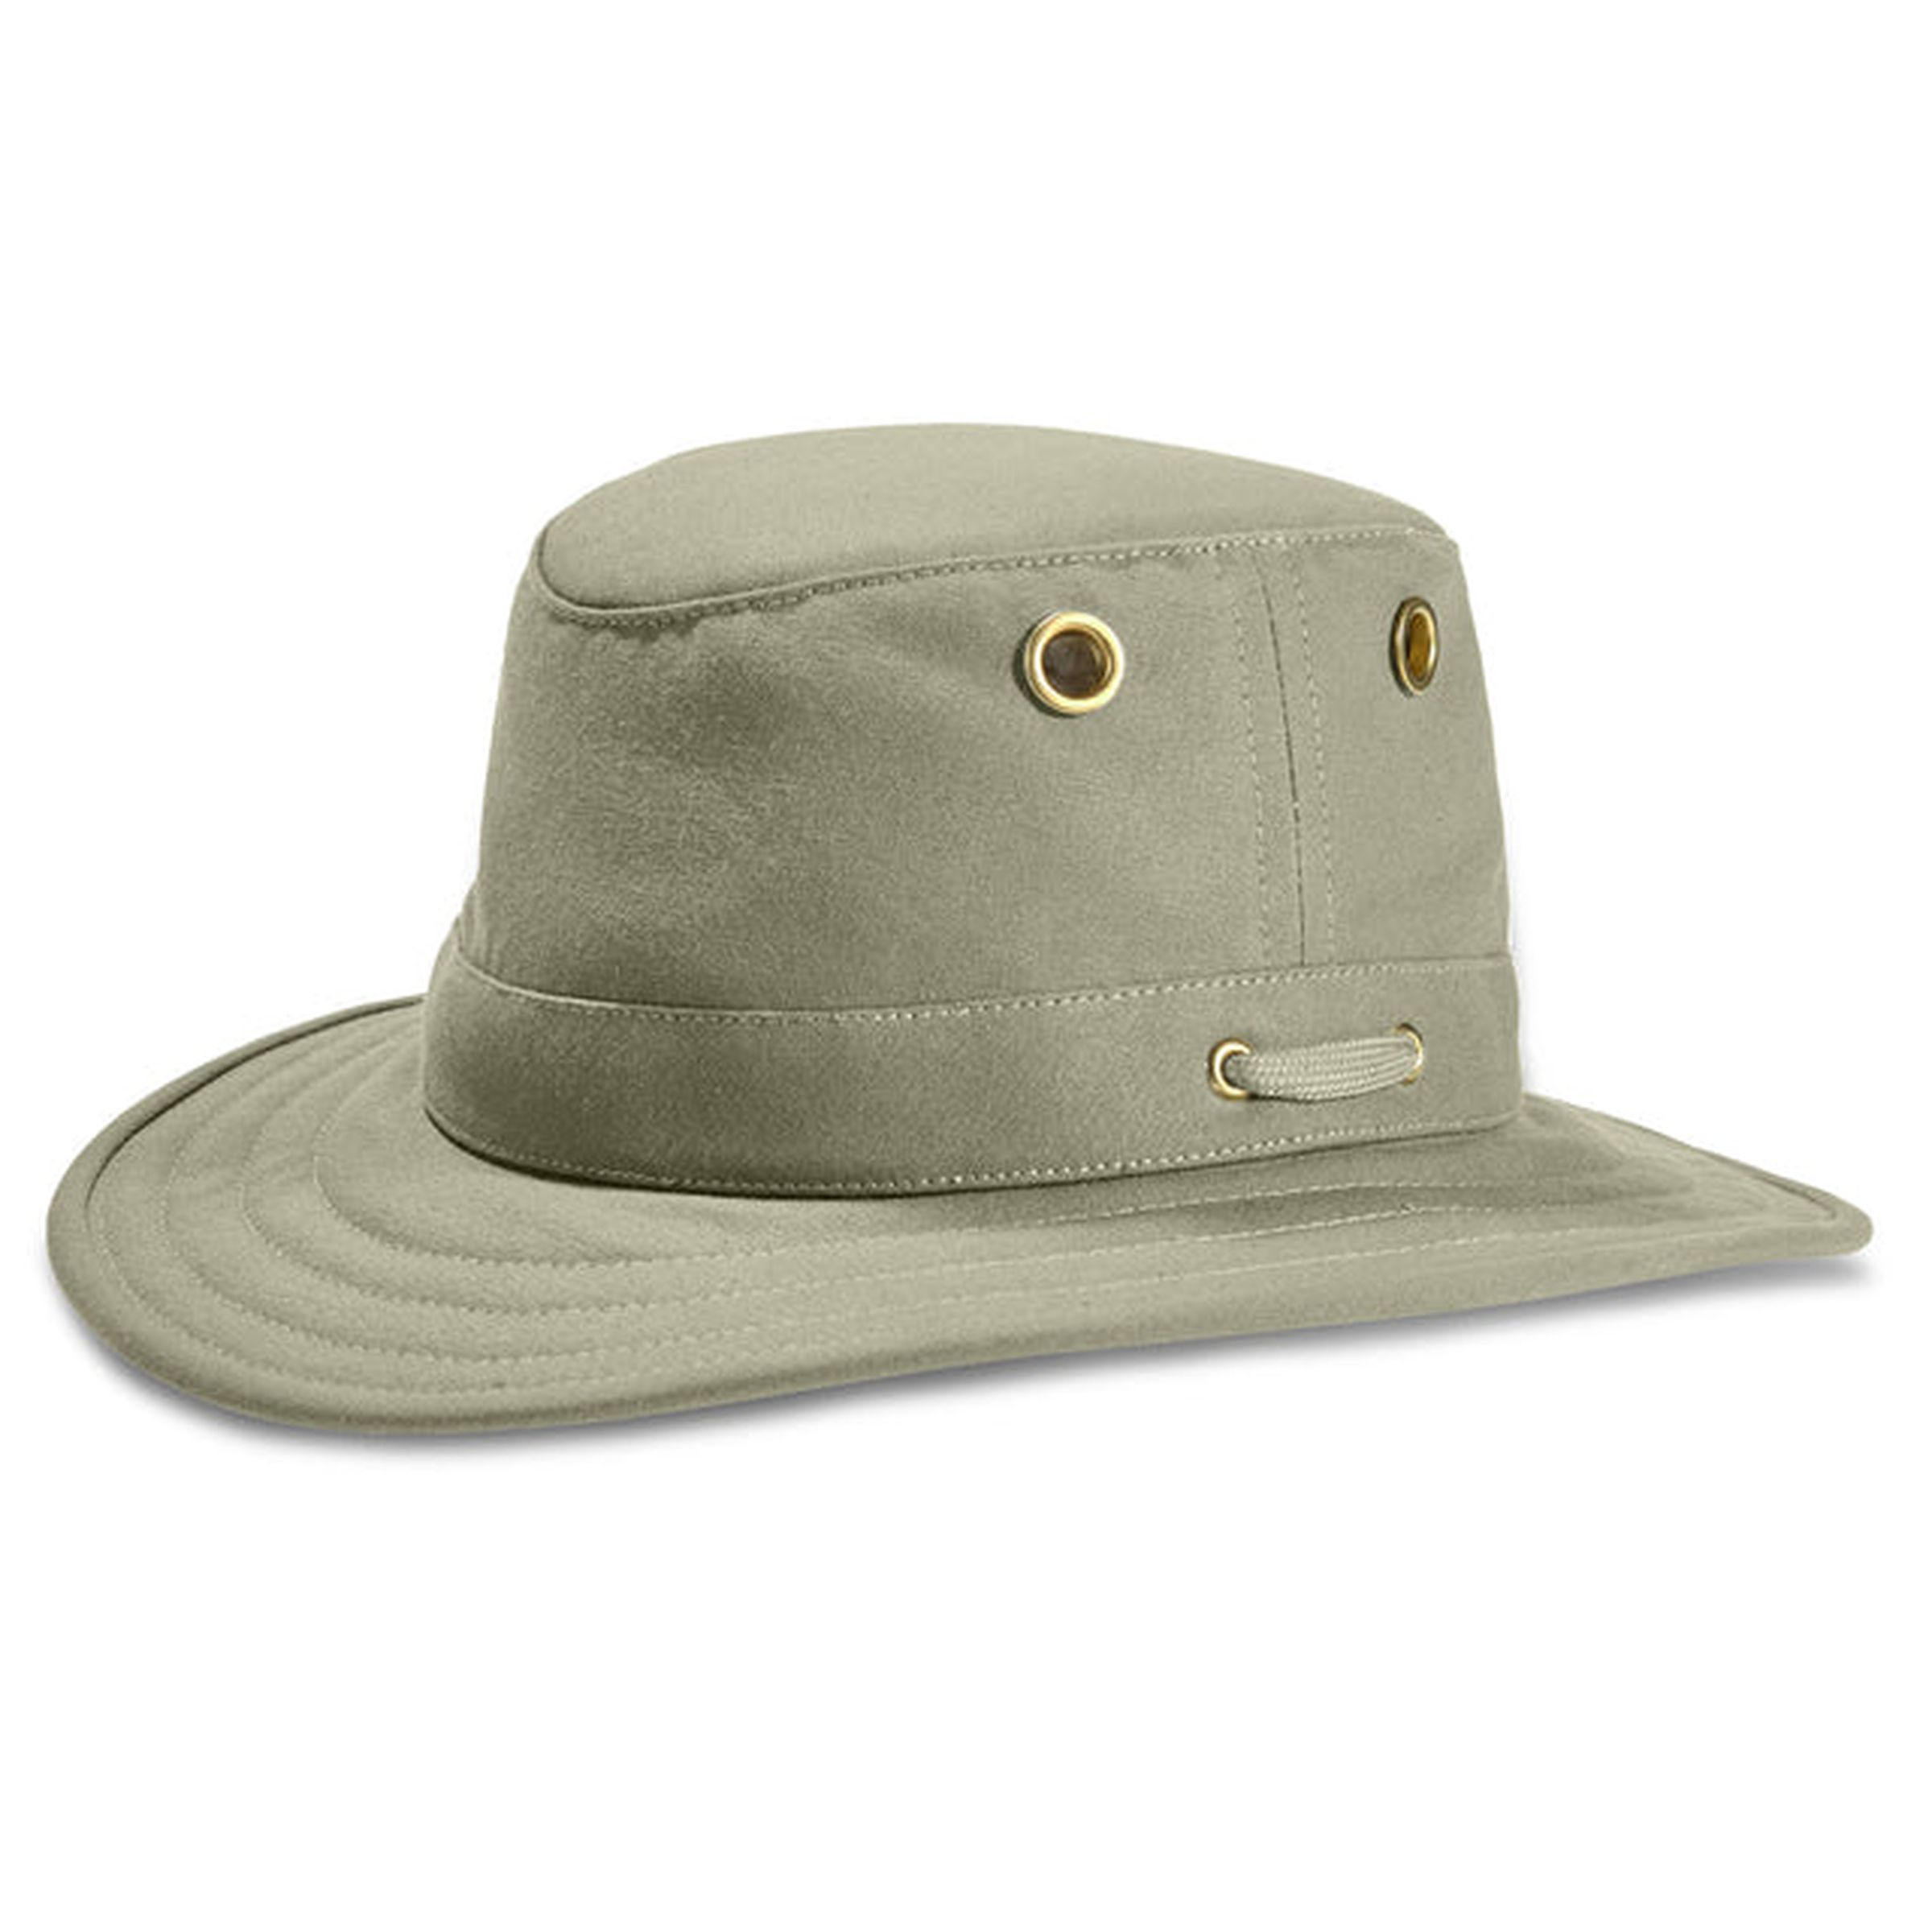 Tan cloth hat with wide brim